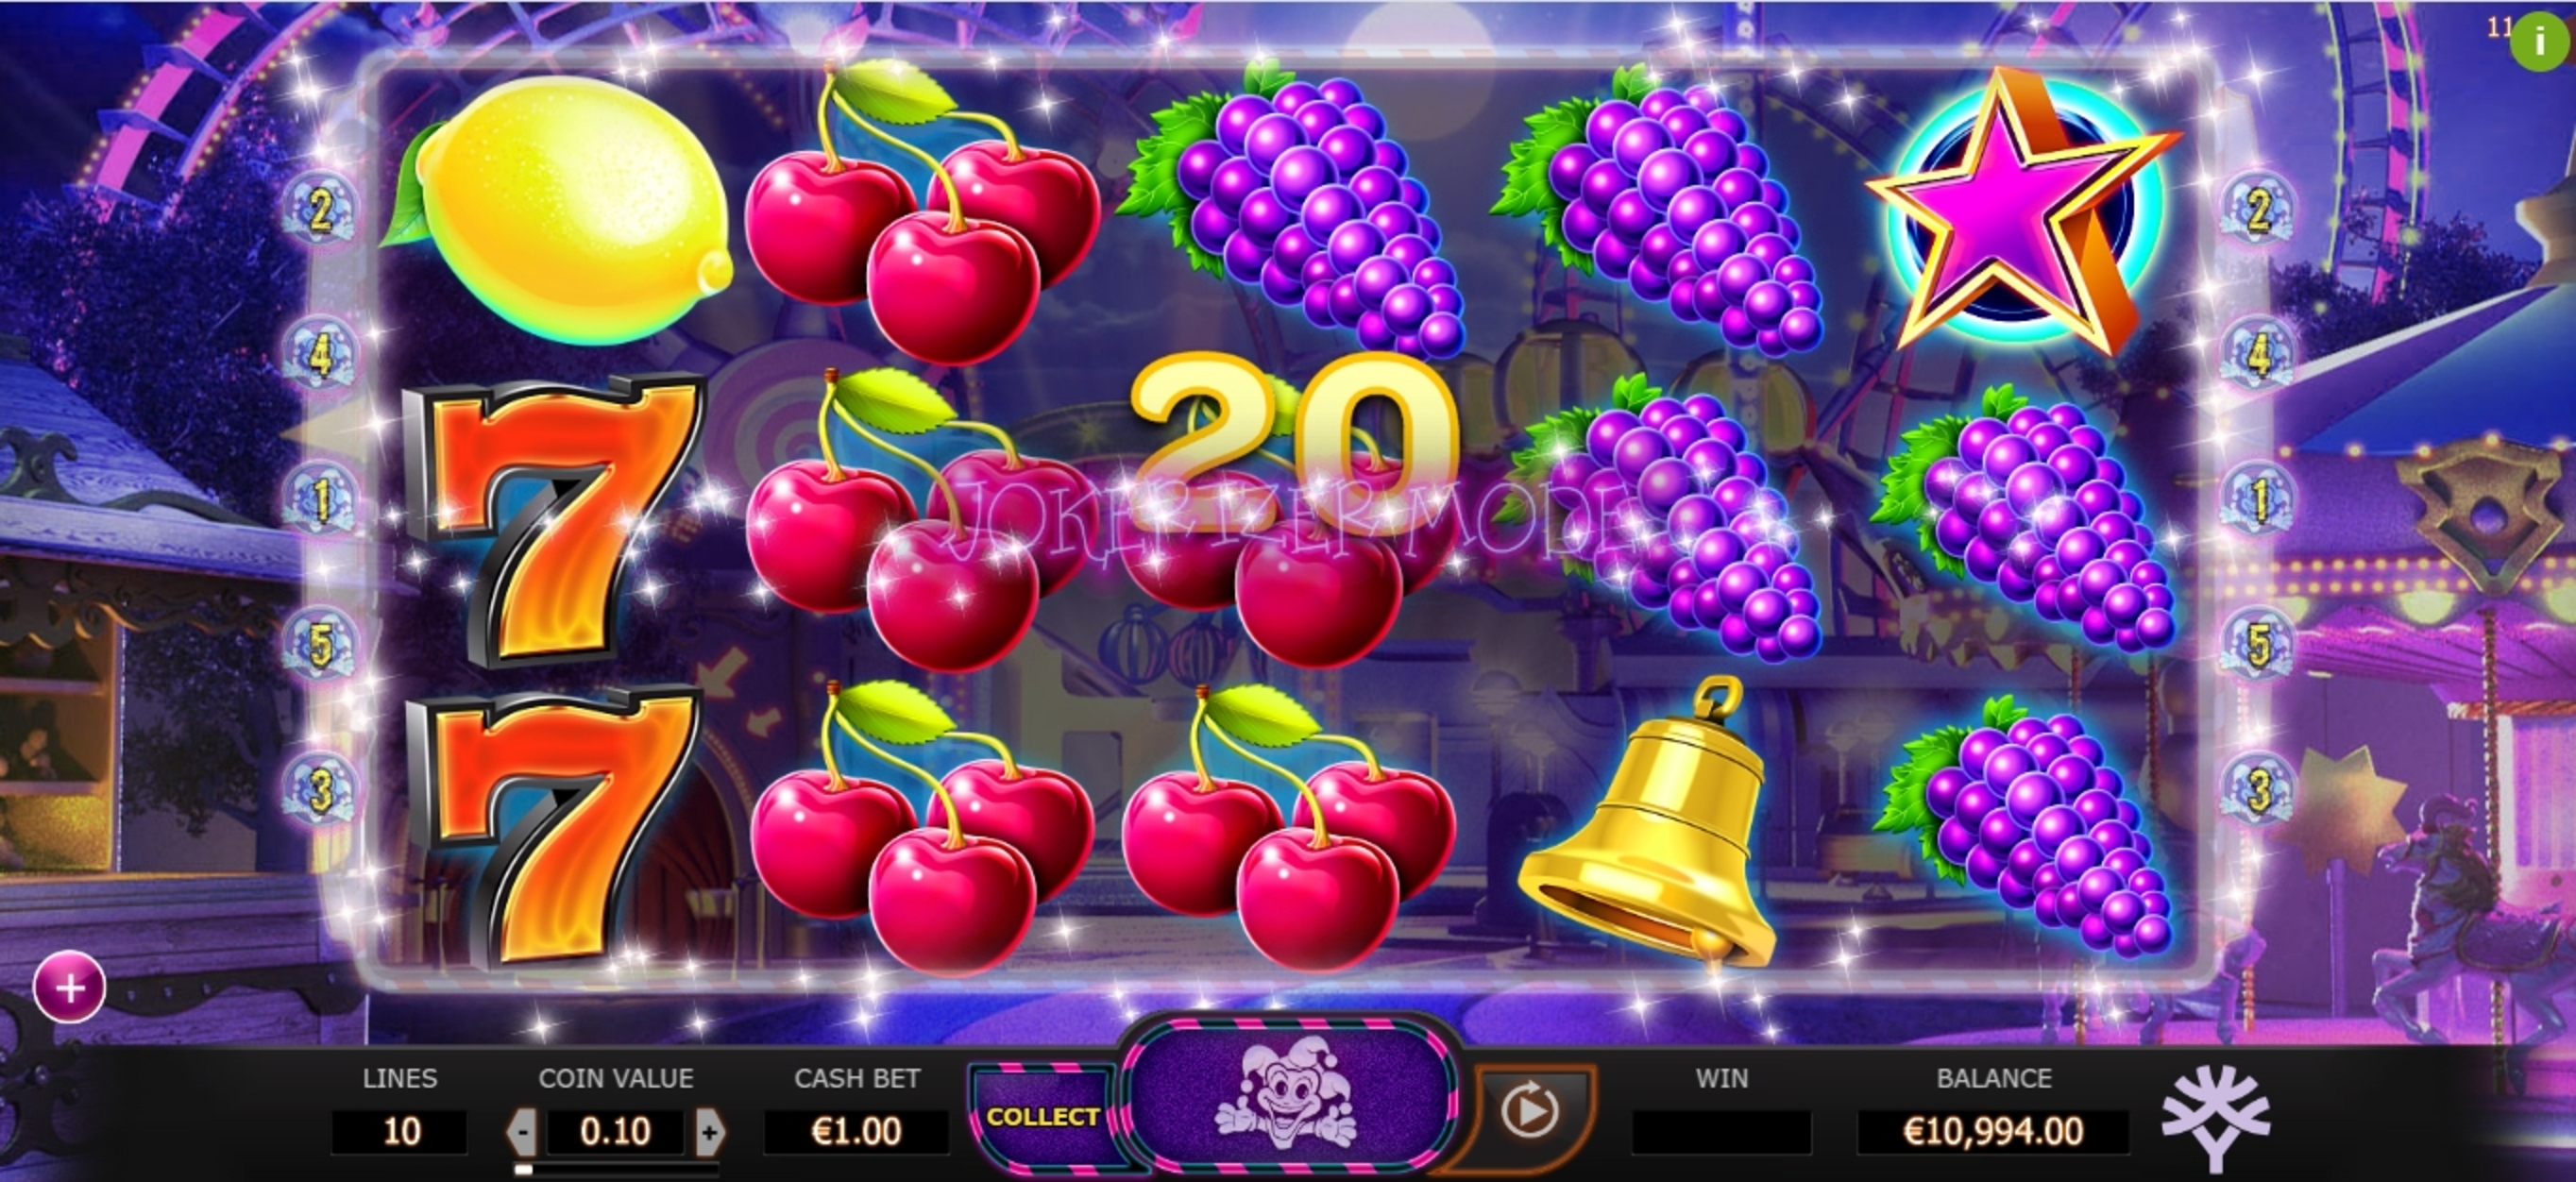 Win Money in Jokerizer Free Slot Game by Yggdrasil Gaming